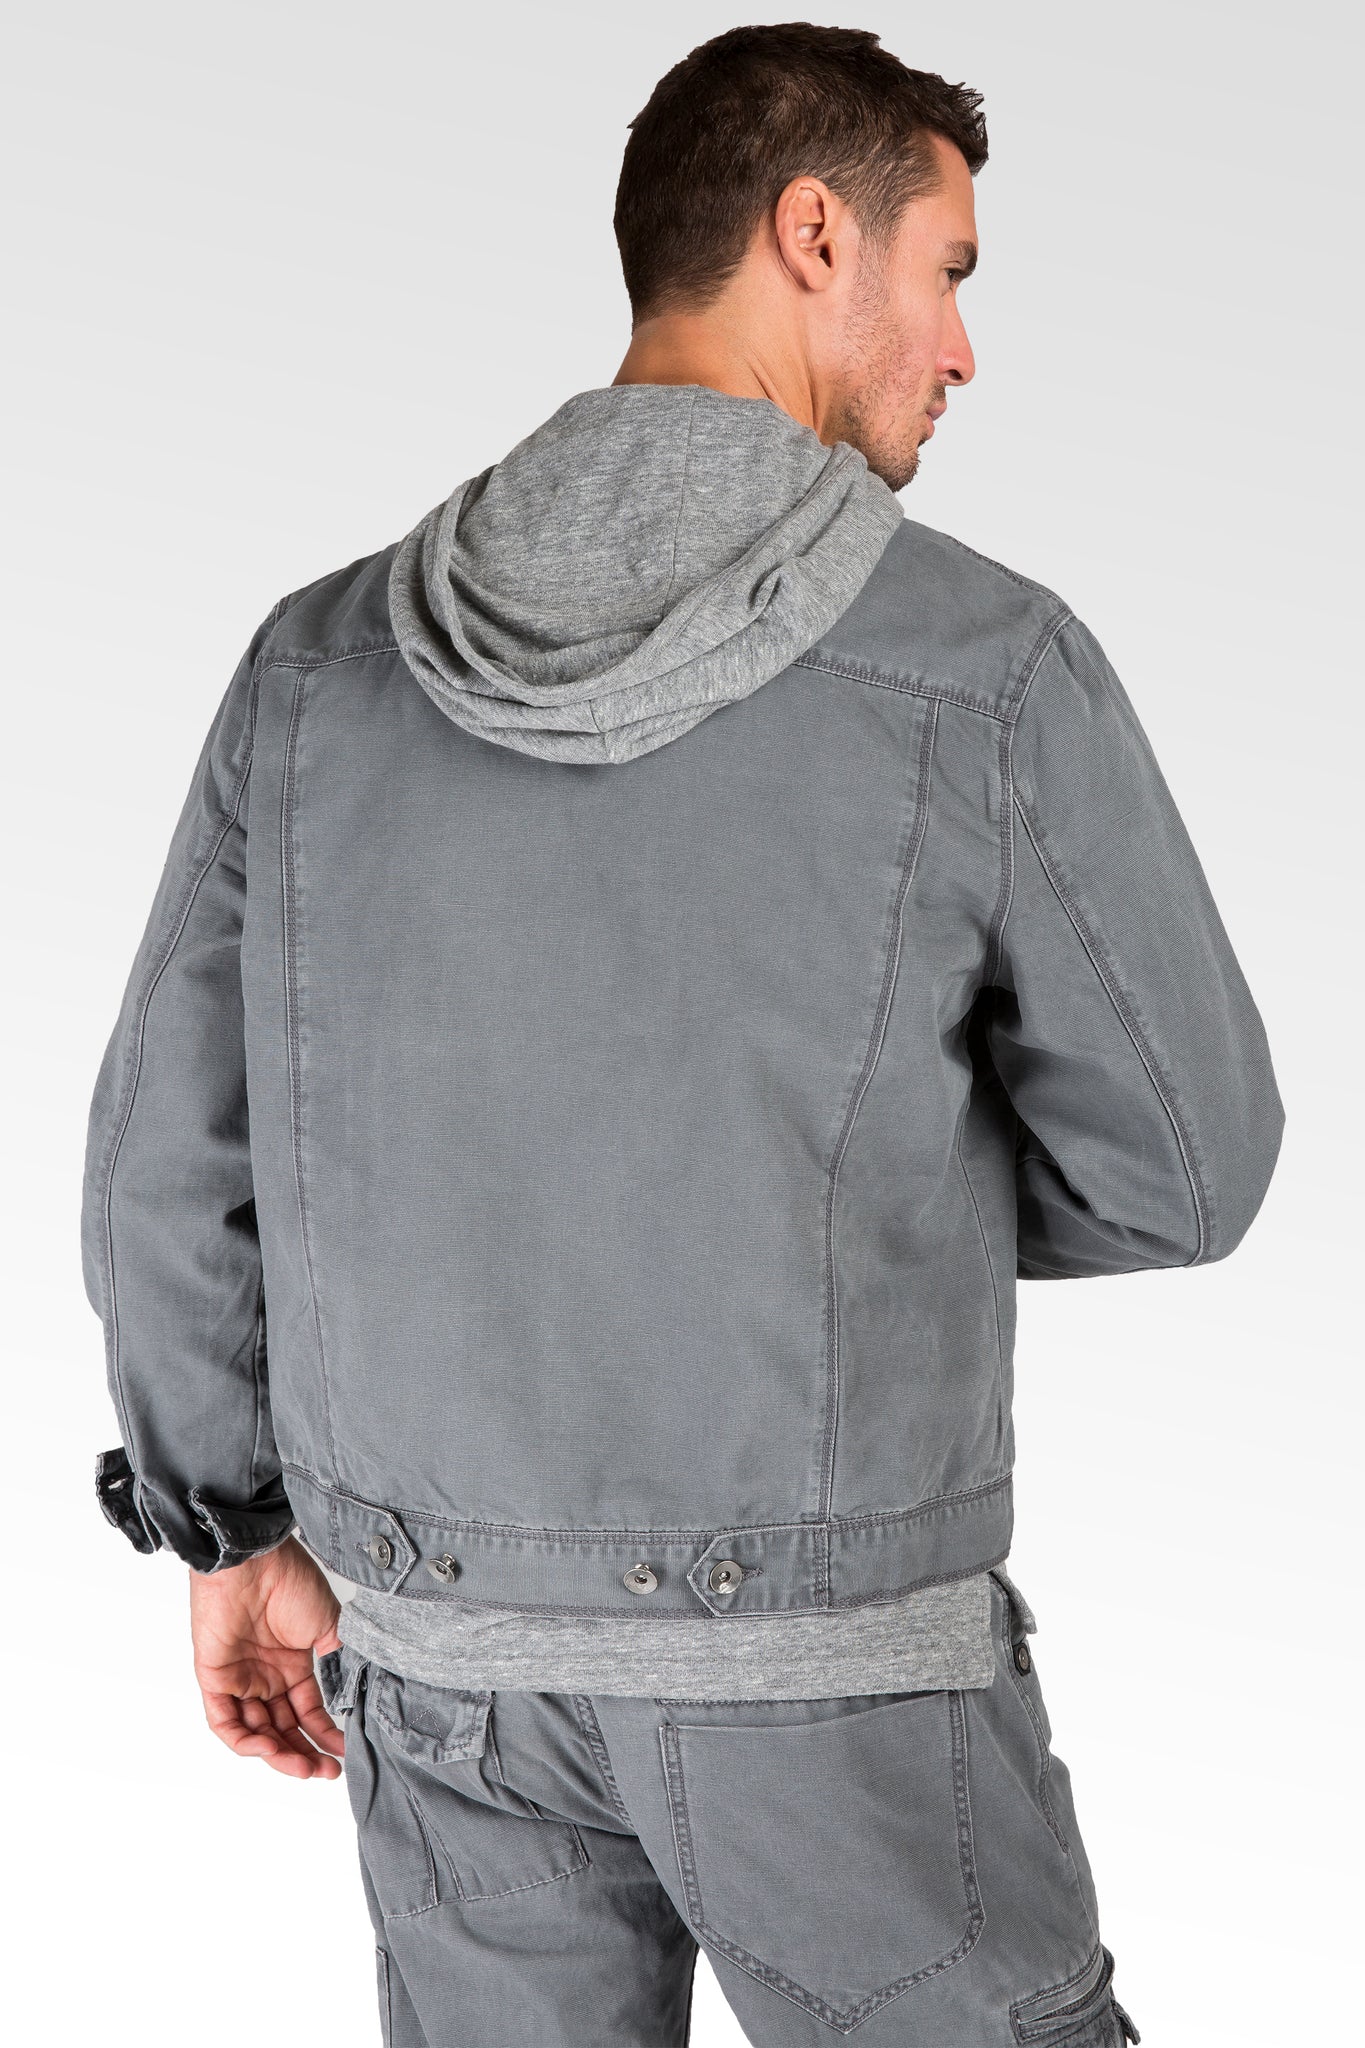 Charcoal Grey Heavy Stone Wash Canvas Trucker Jacket 100% Cotton Rugged & Stylish